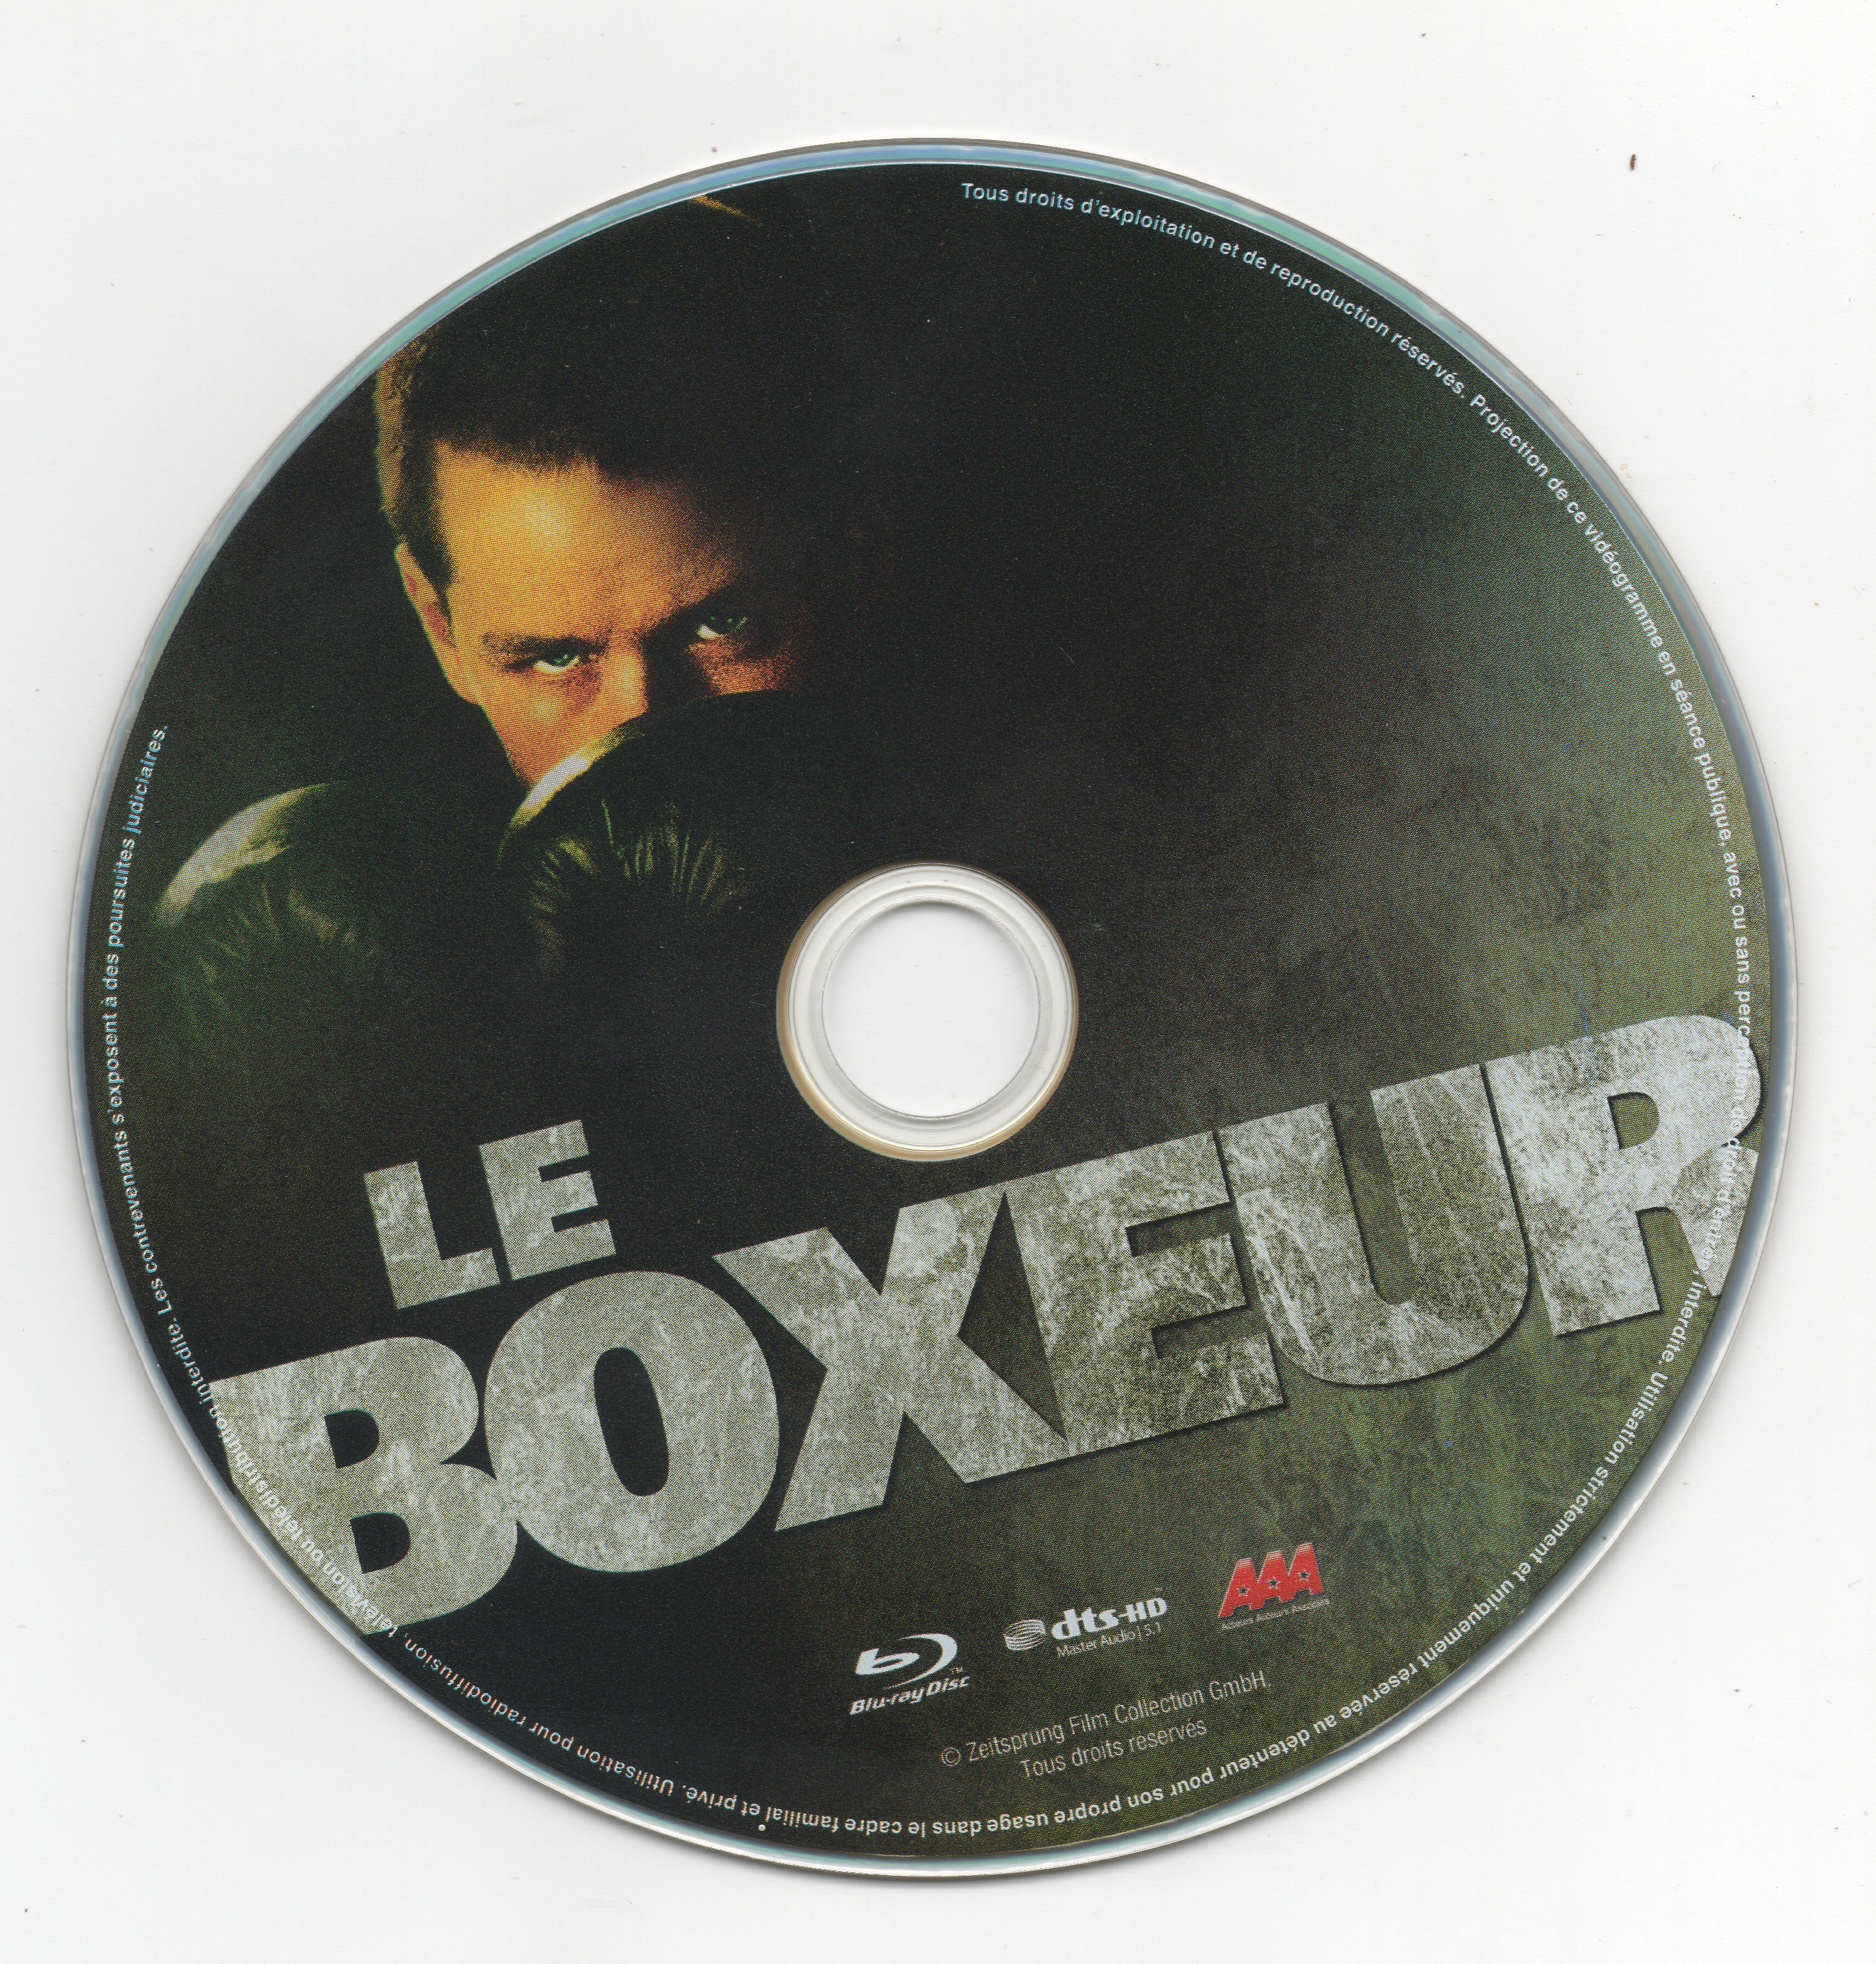 Le Boxeur (BLU-RAY)